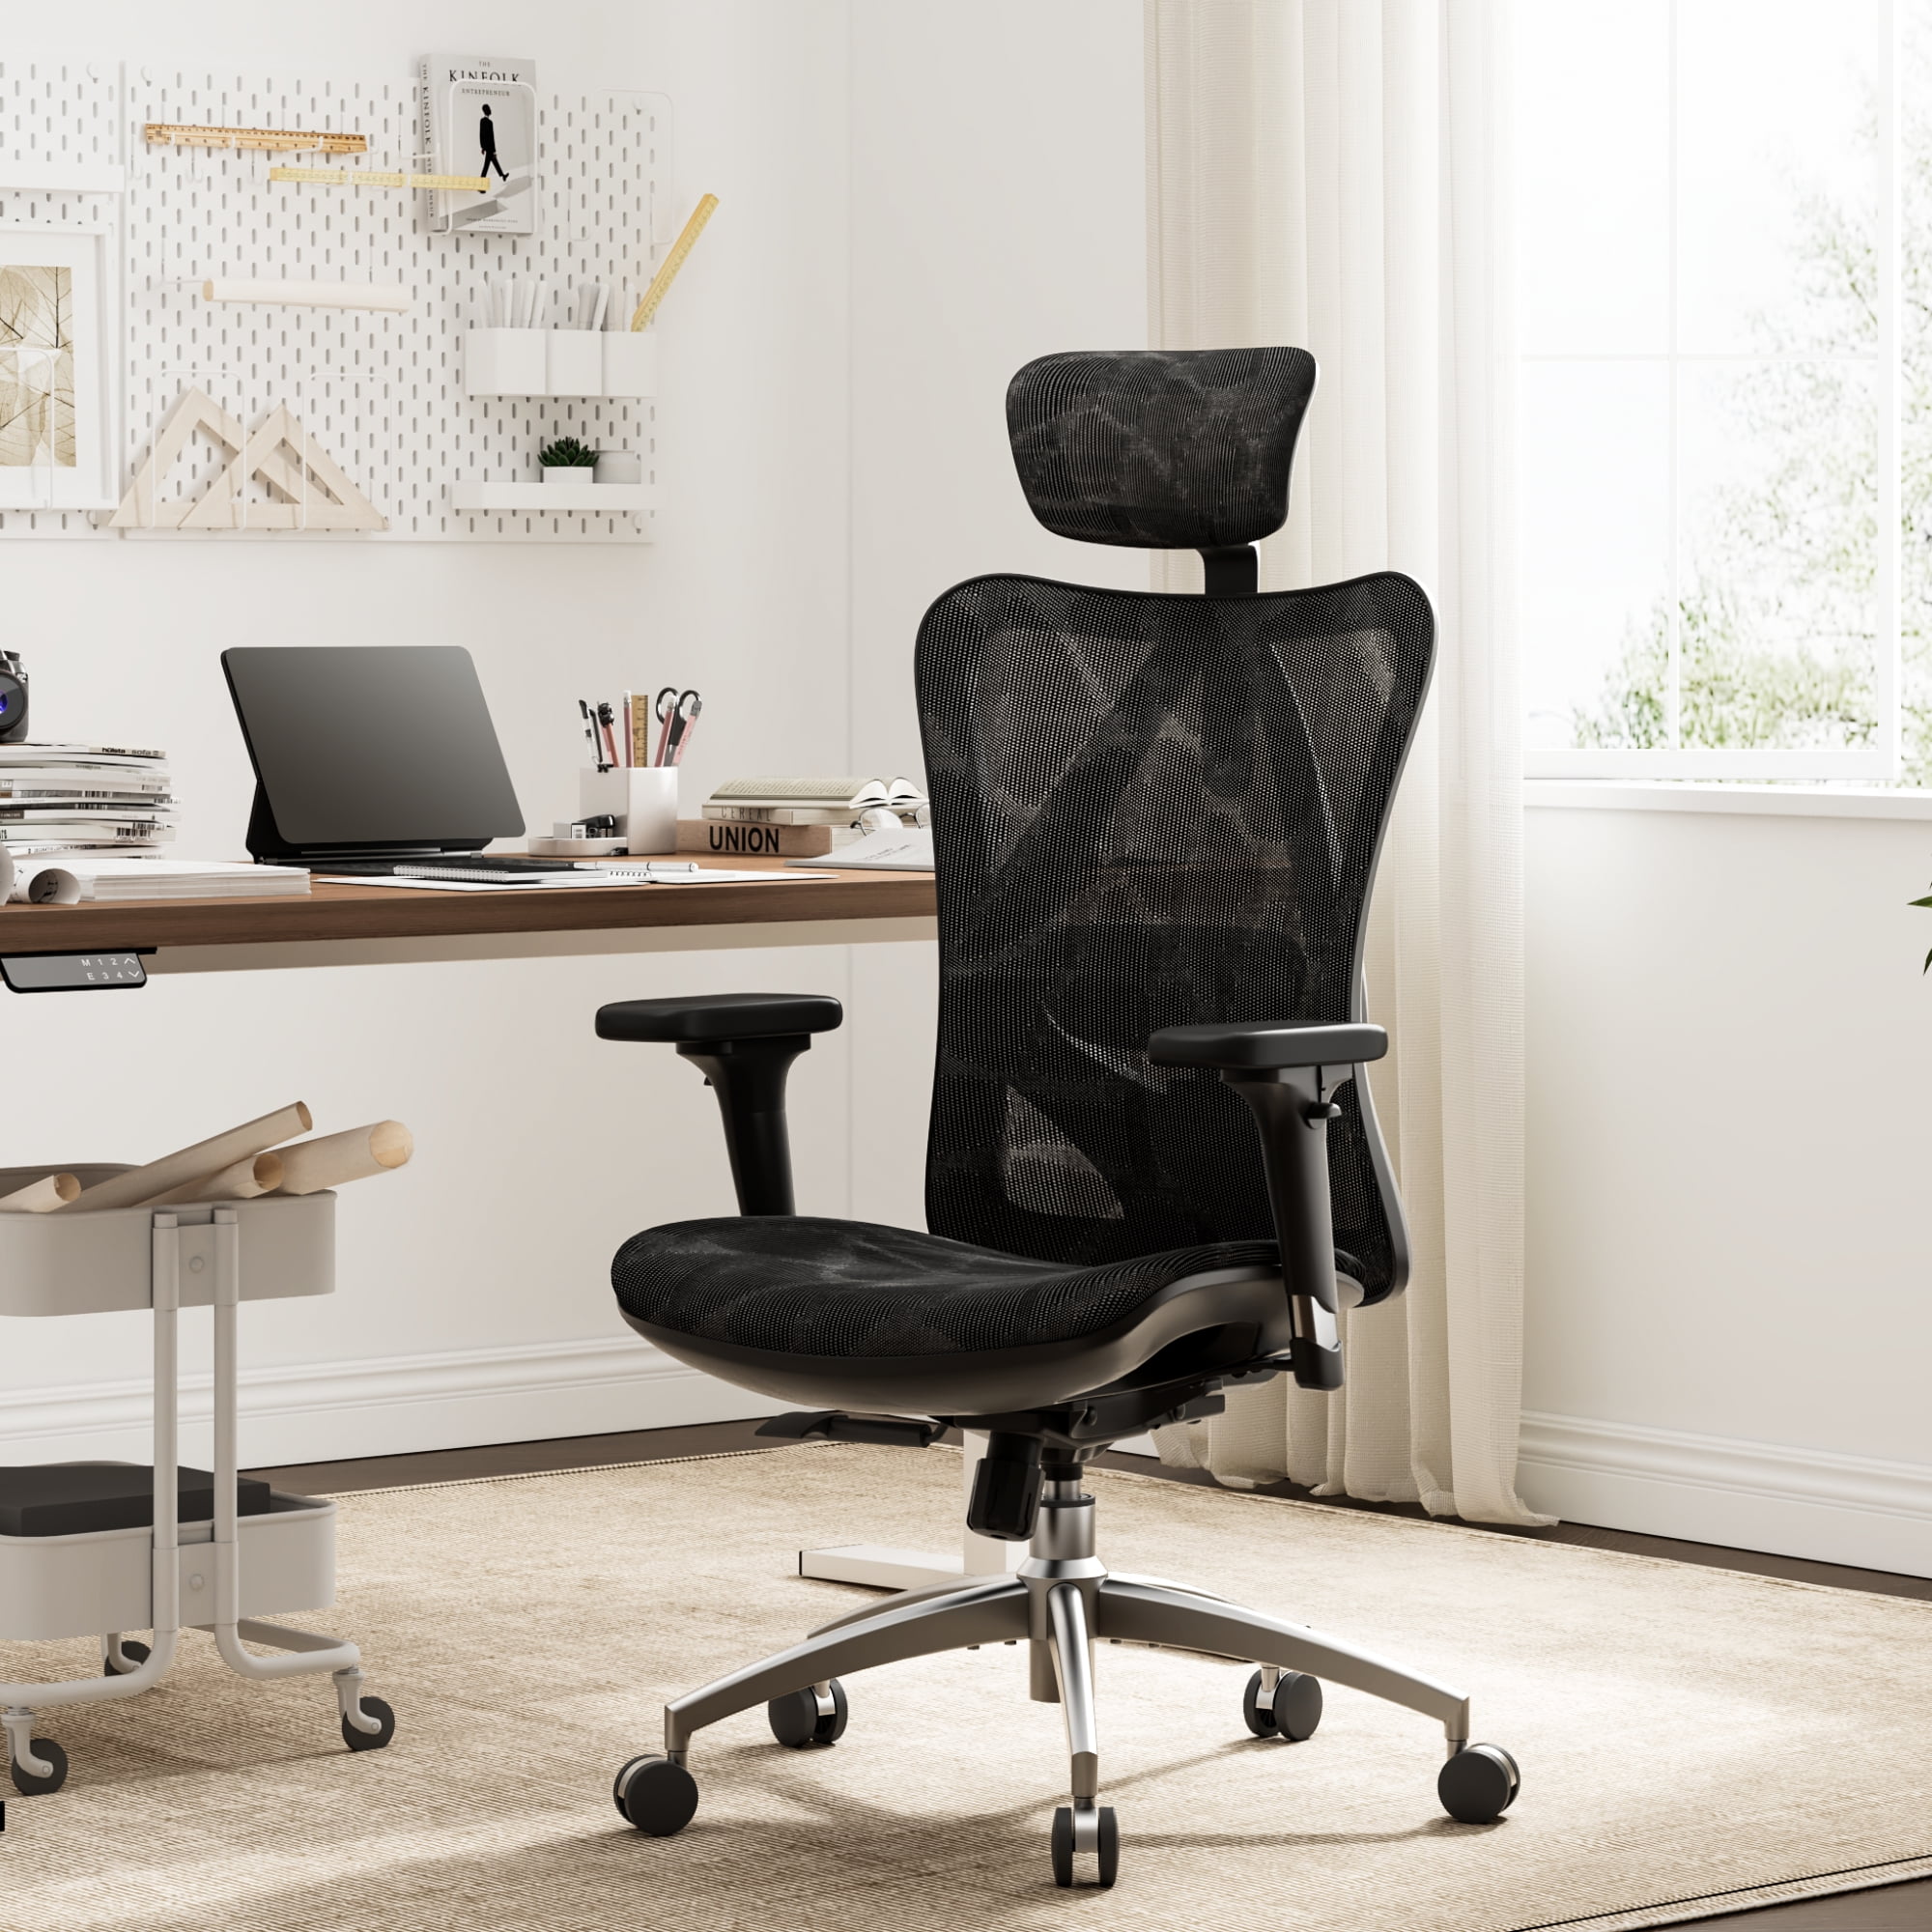 SIHOO M57 Ergonomic Office Chair with Premium Mesh Seat, Headrest